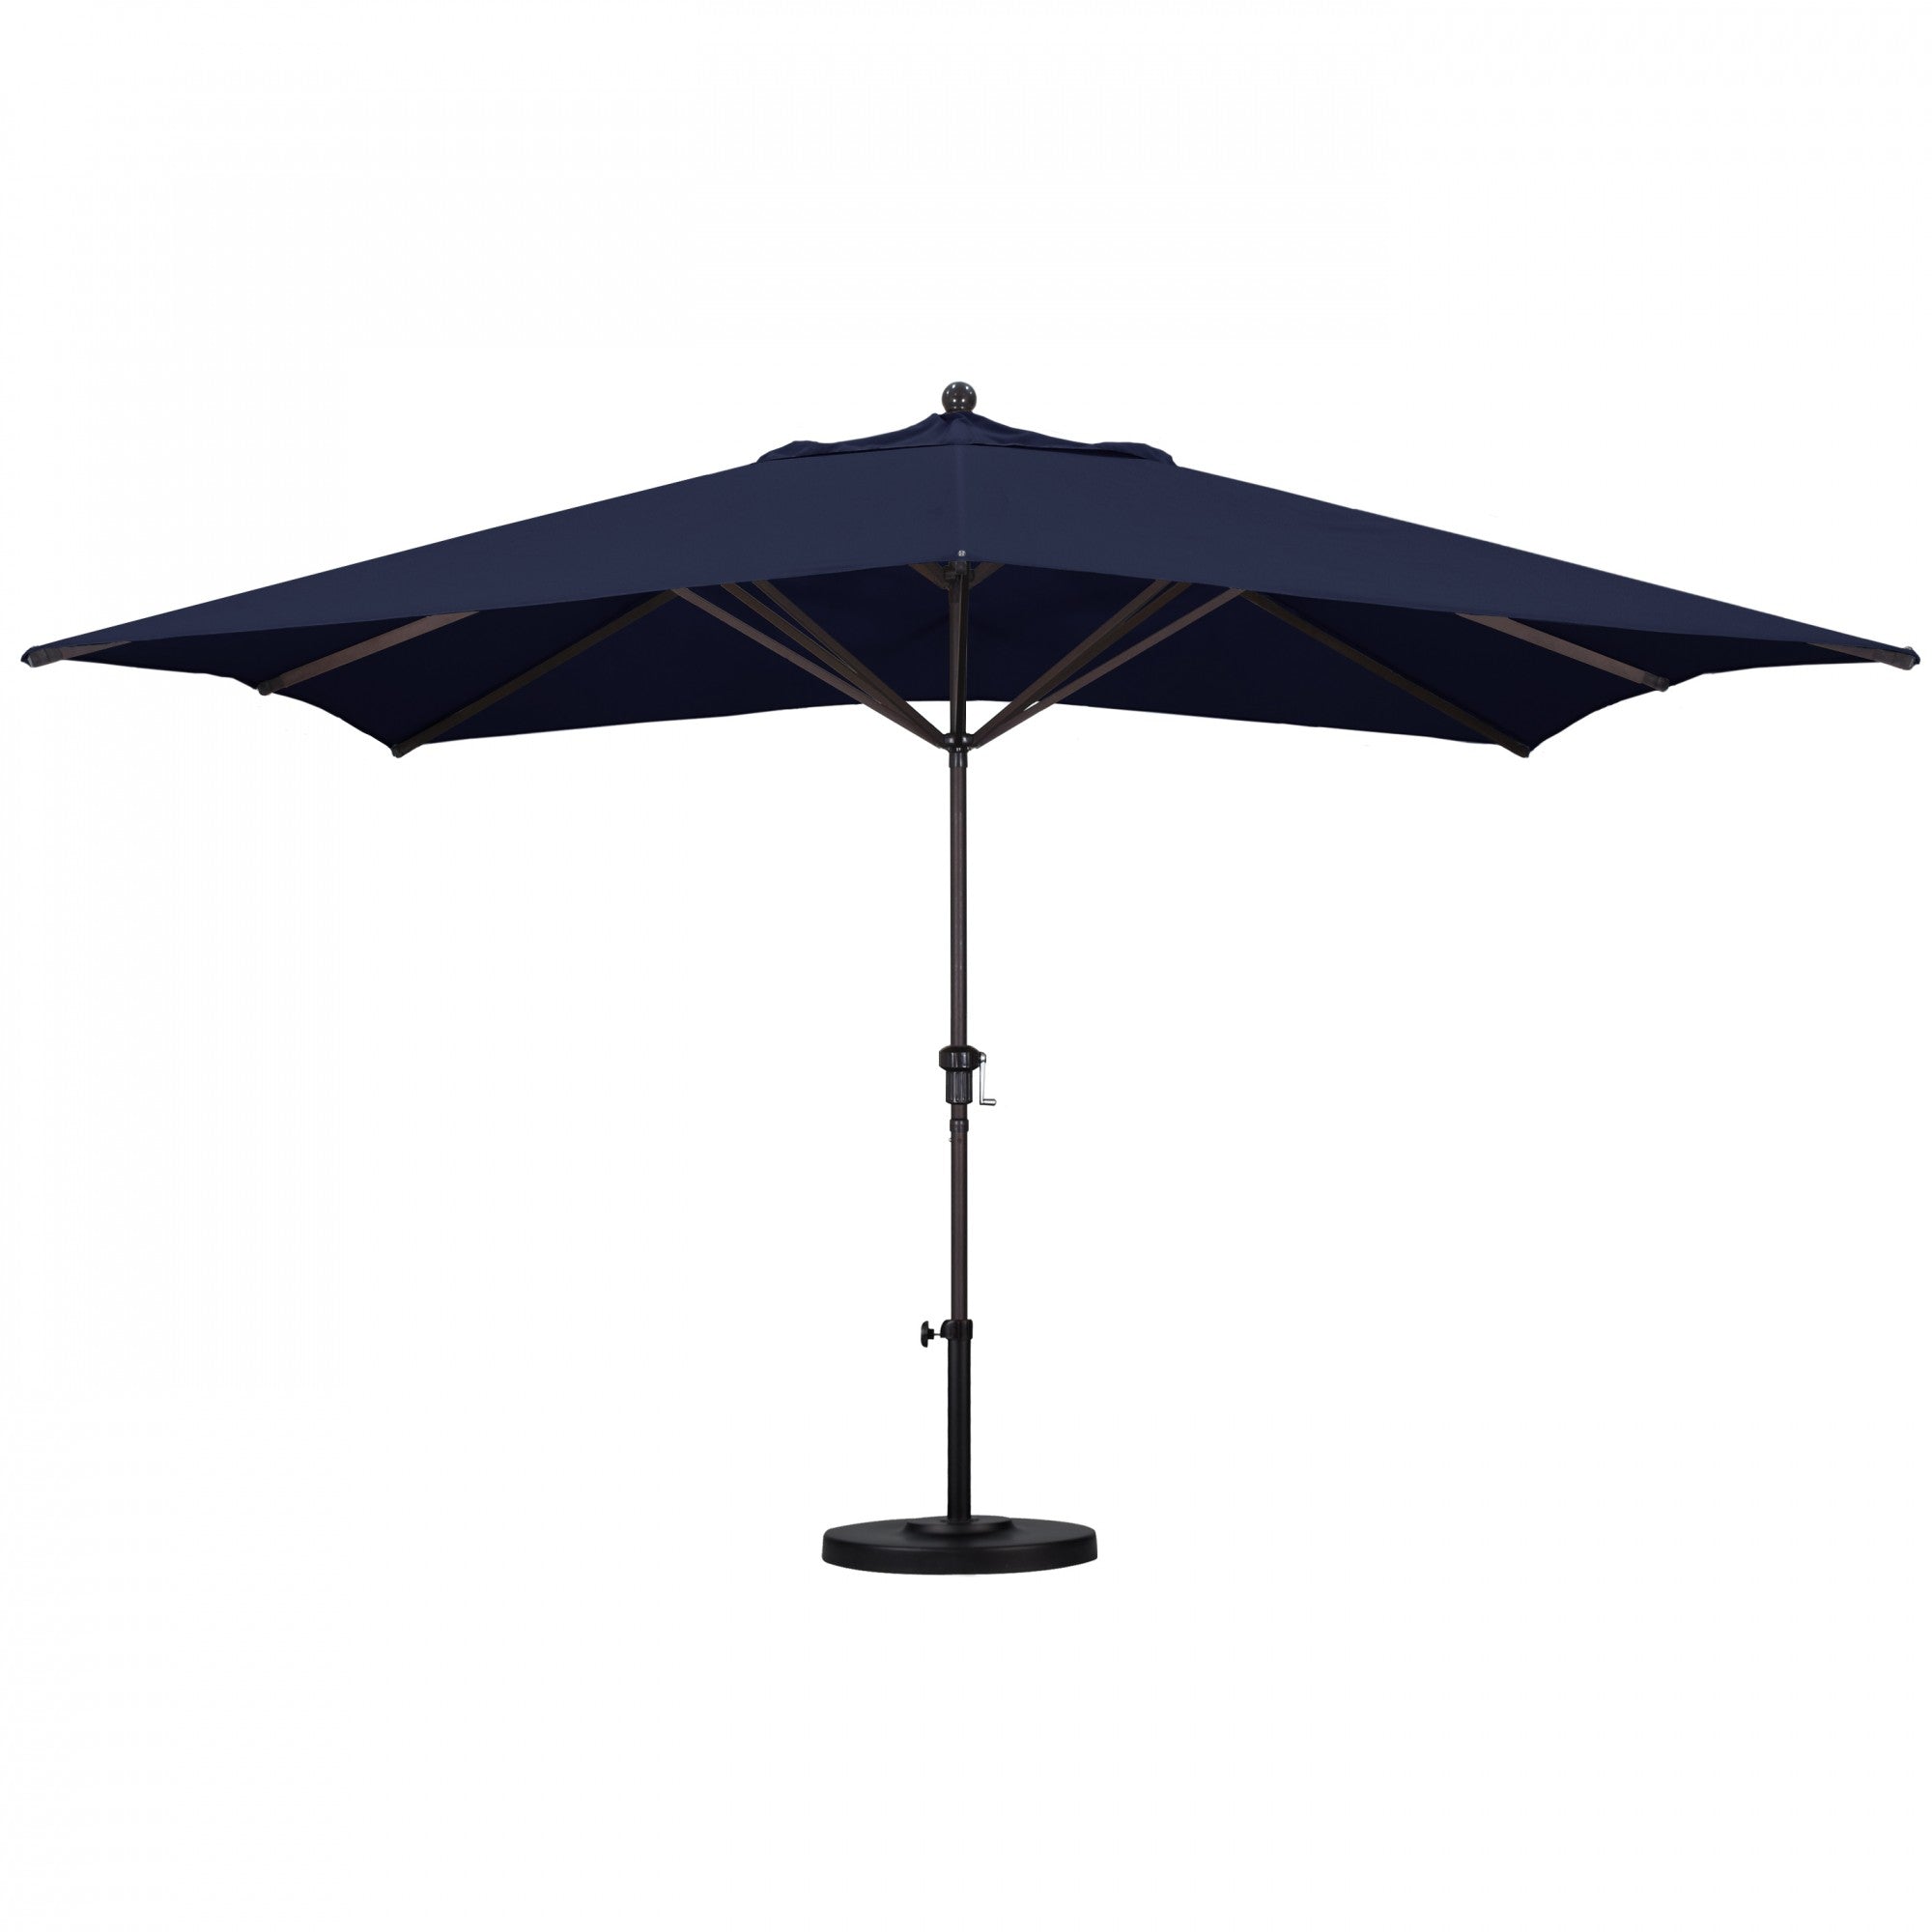 California Umbrella - 11' - Patio Umbrella Umbrella - Aluminum Pole - Navy - Sunbrella  - GS1188117-5439